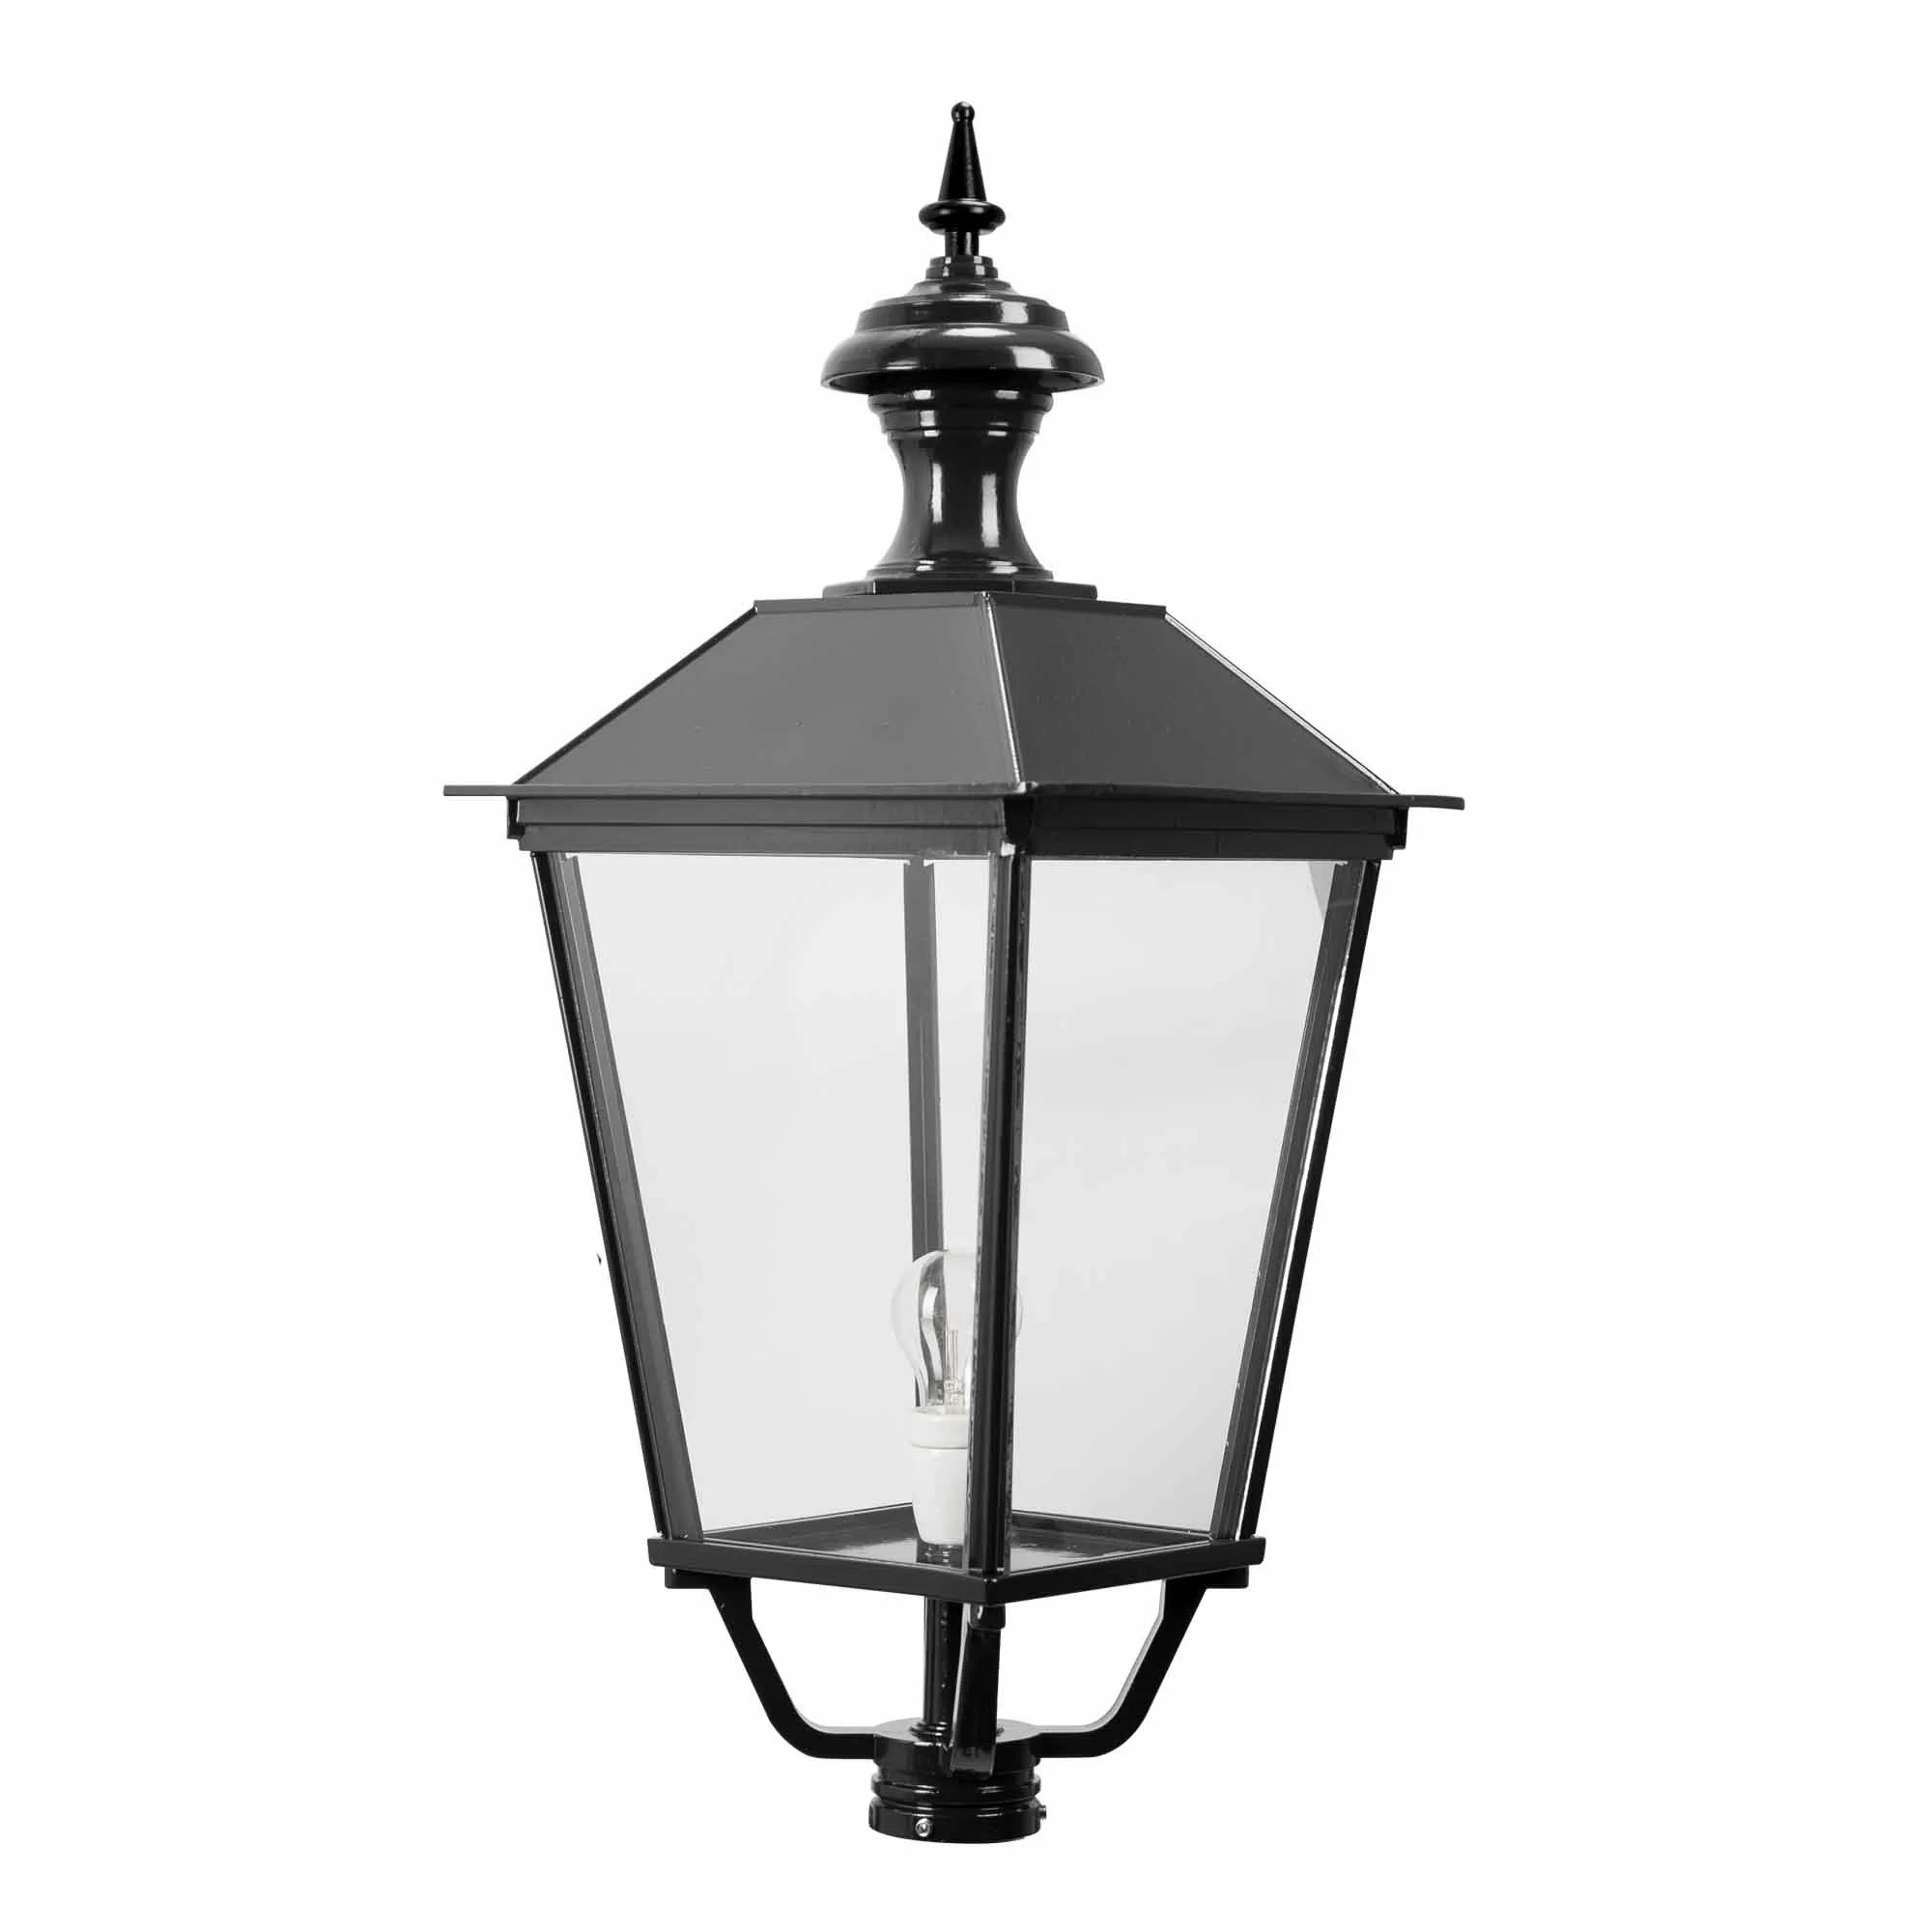 K5 post lantern | Official site KS outdoor lighting company